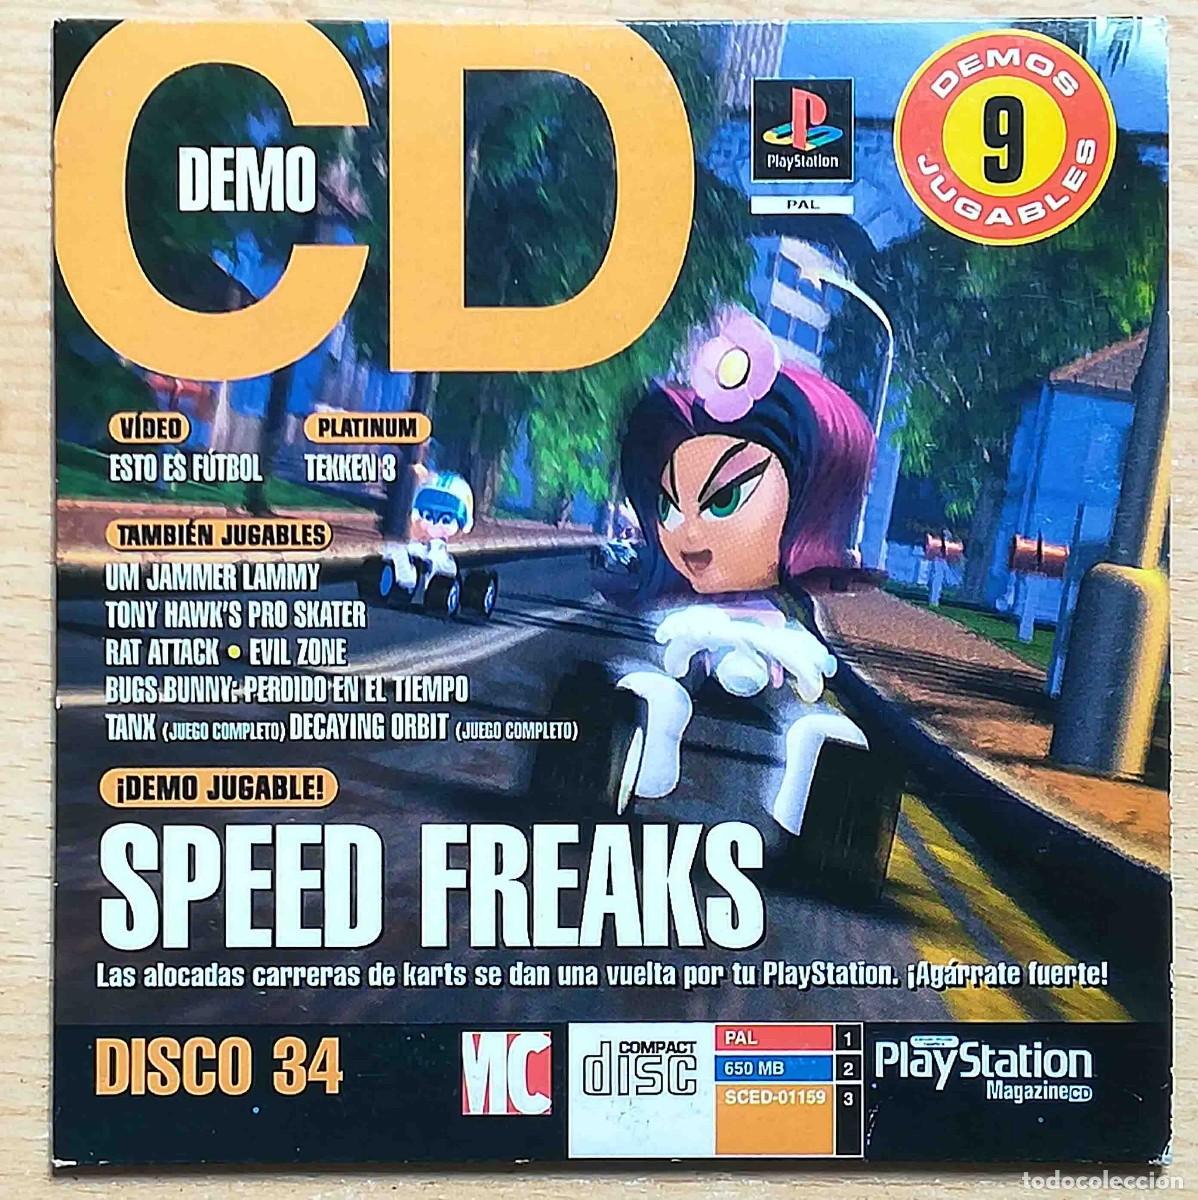 Playstation Magazin Demo CD (euro demo 49)